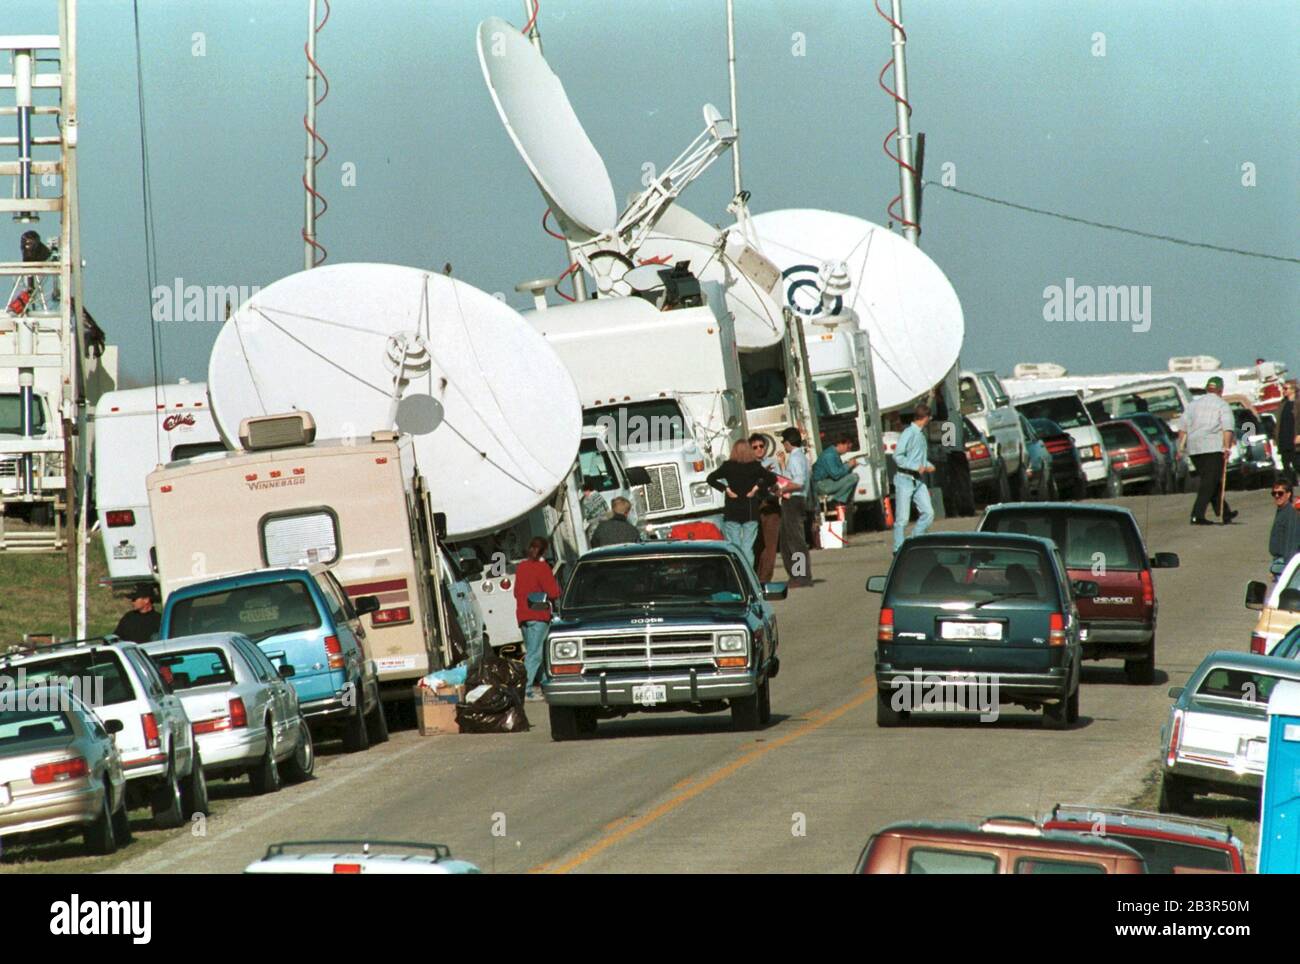 Waco Texas USA, March 1993: Media compound dubbed 'Satellite City' outside Waco during the Branch Davidian standoff. ©Bob Daemmrich Stock Photo